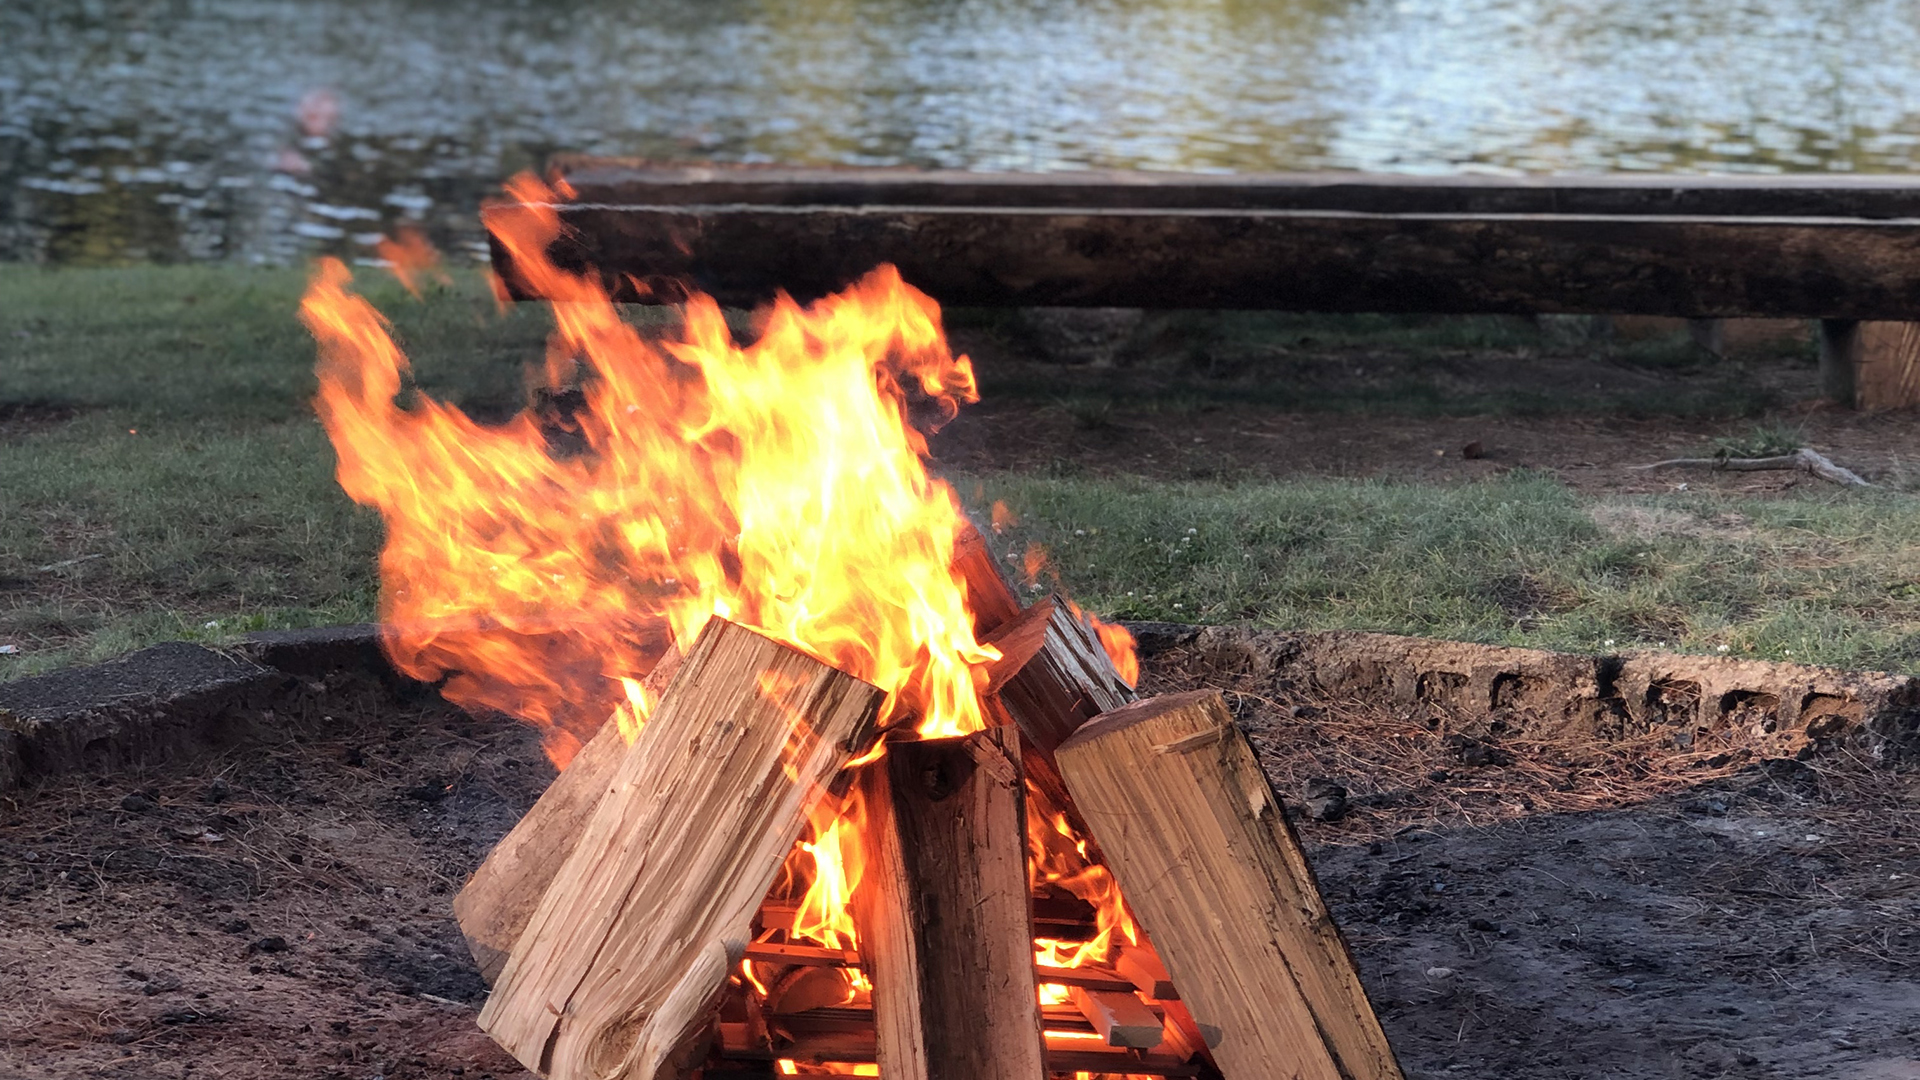 The last campfire steam фото 103